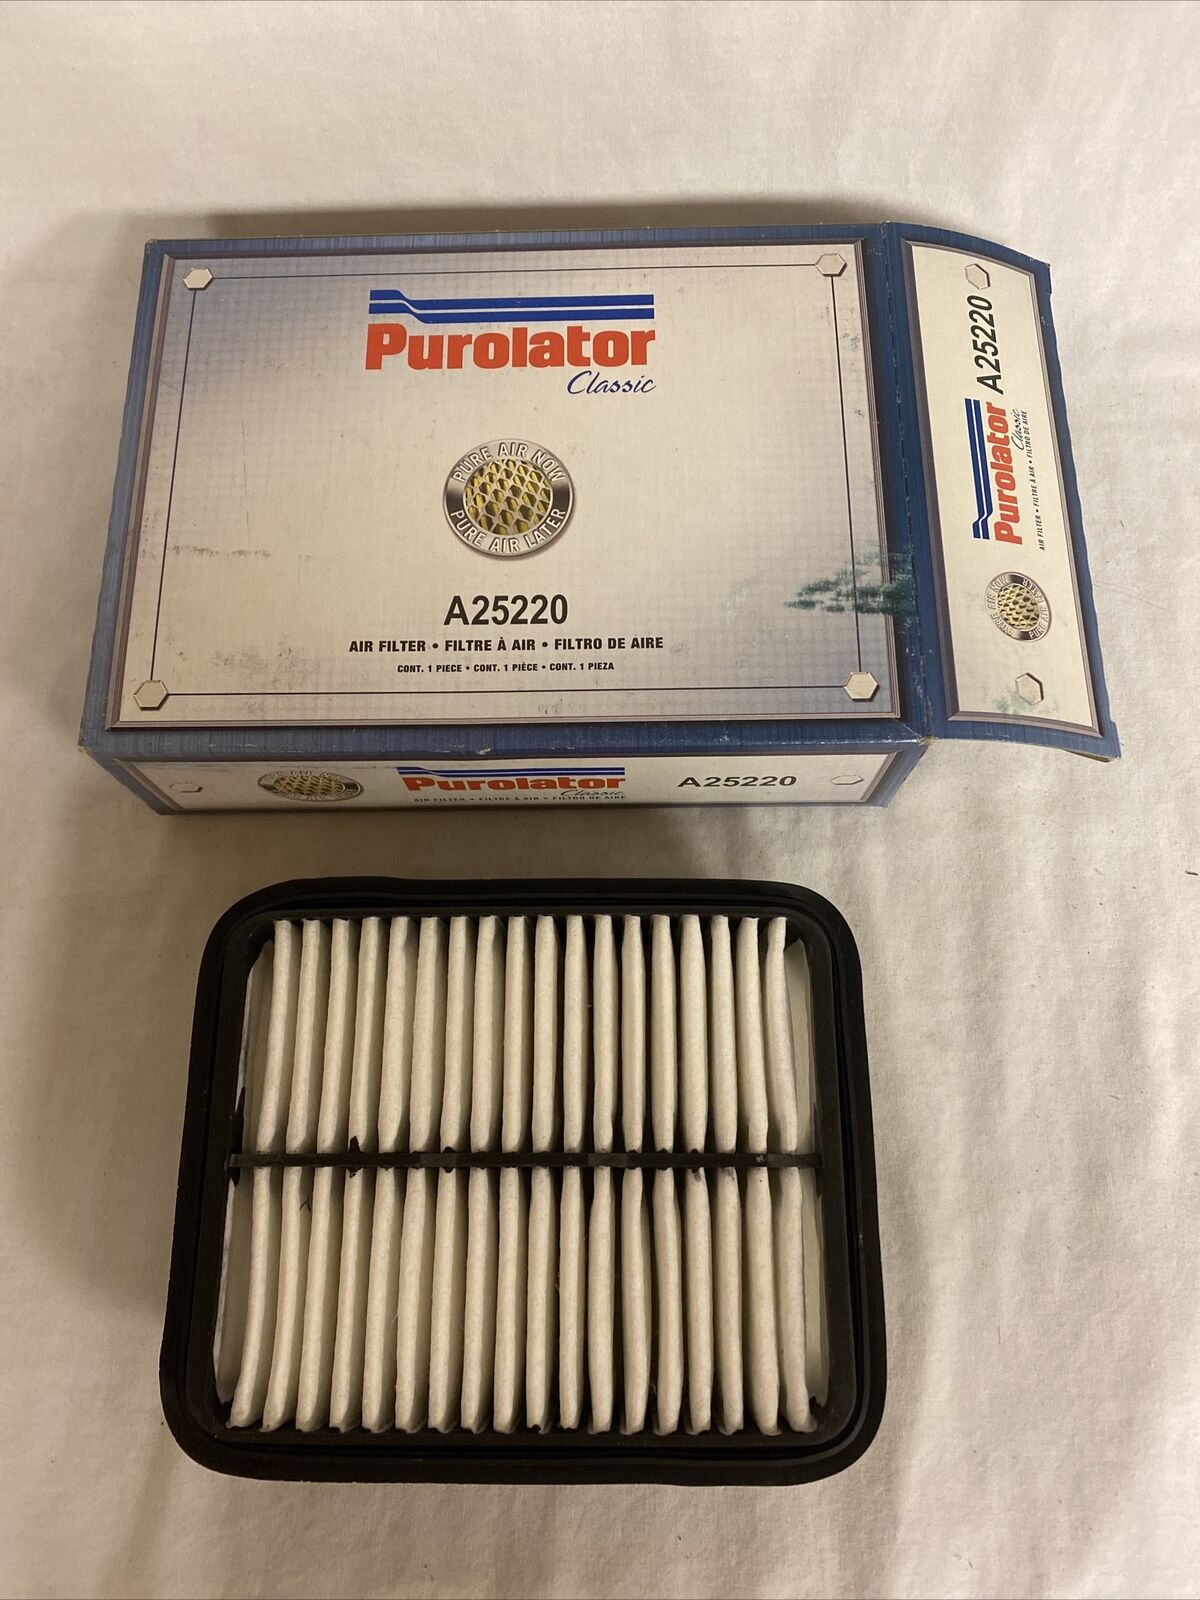 Purolator Classic A25220 Air Filter fits select 1995 - 2002 Suzuki Esteem